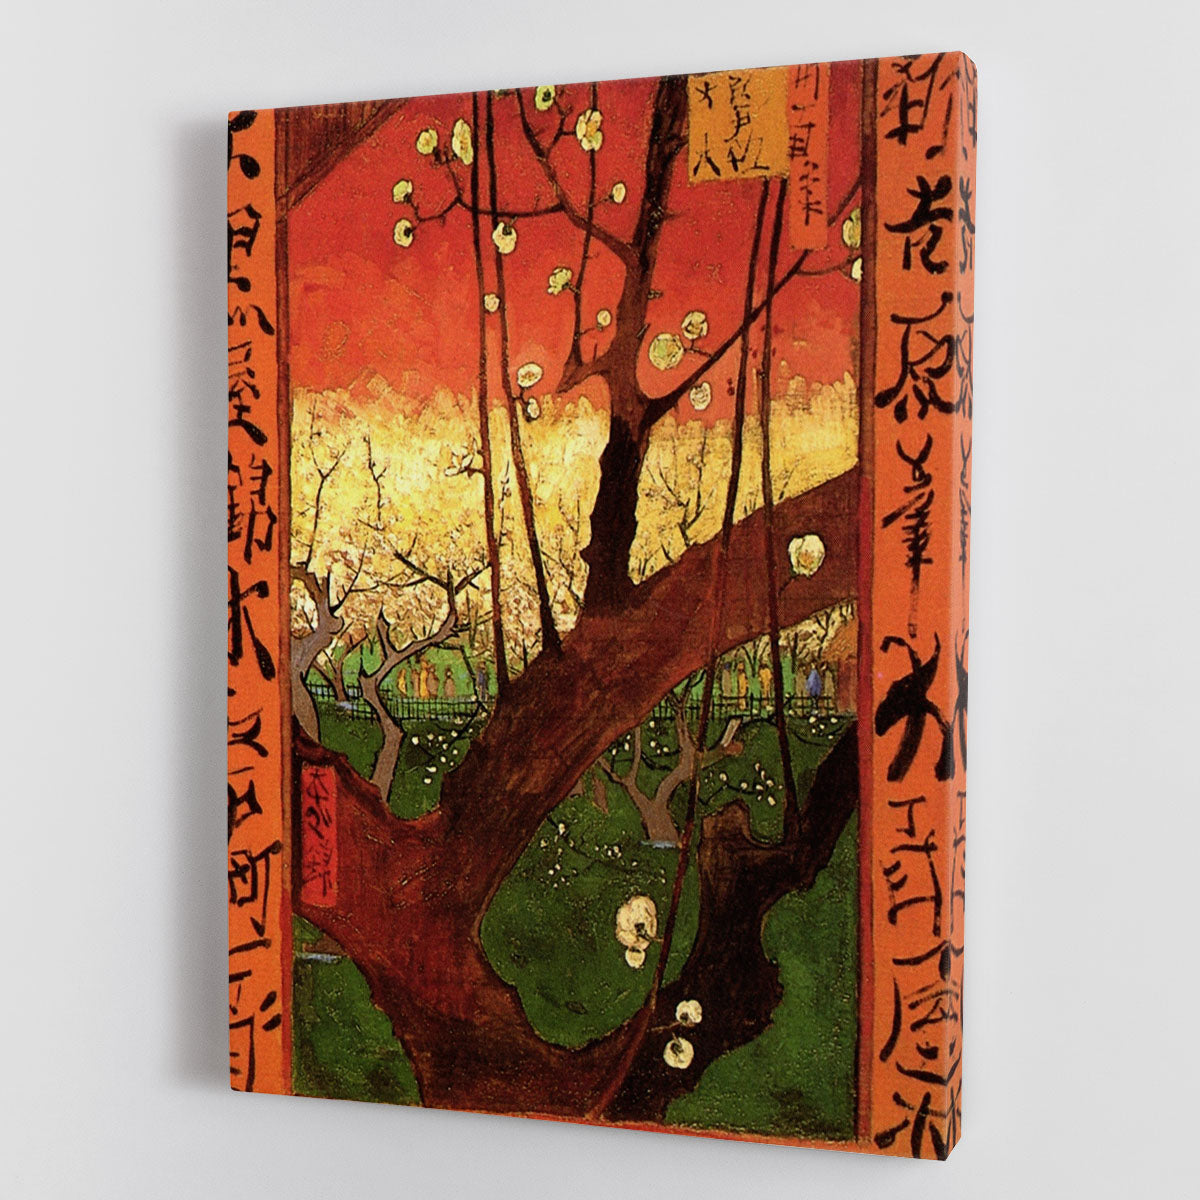 Japonaiserie Flowering Plum Tree after Hiroshige by Van Gogh Canvas Print or Poster - Canvas Art Rocks - 1